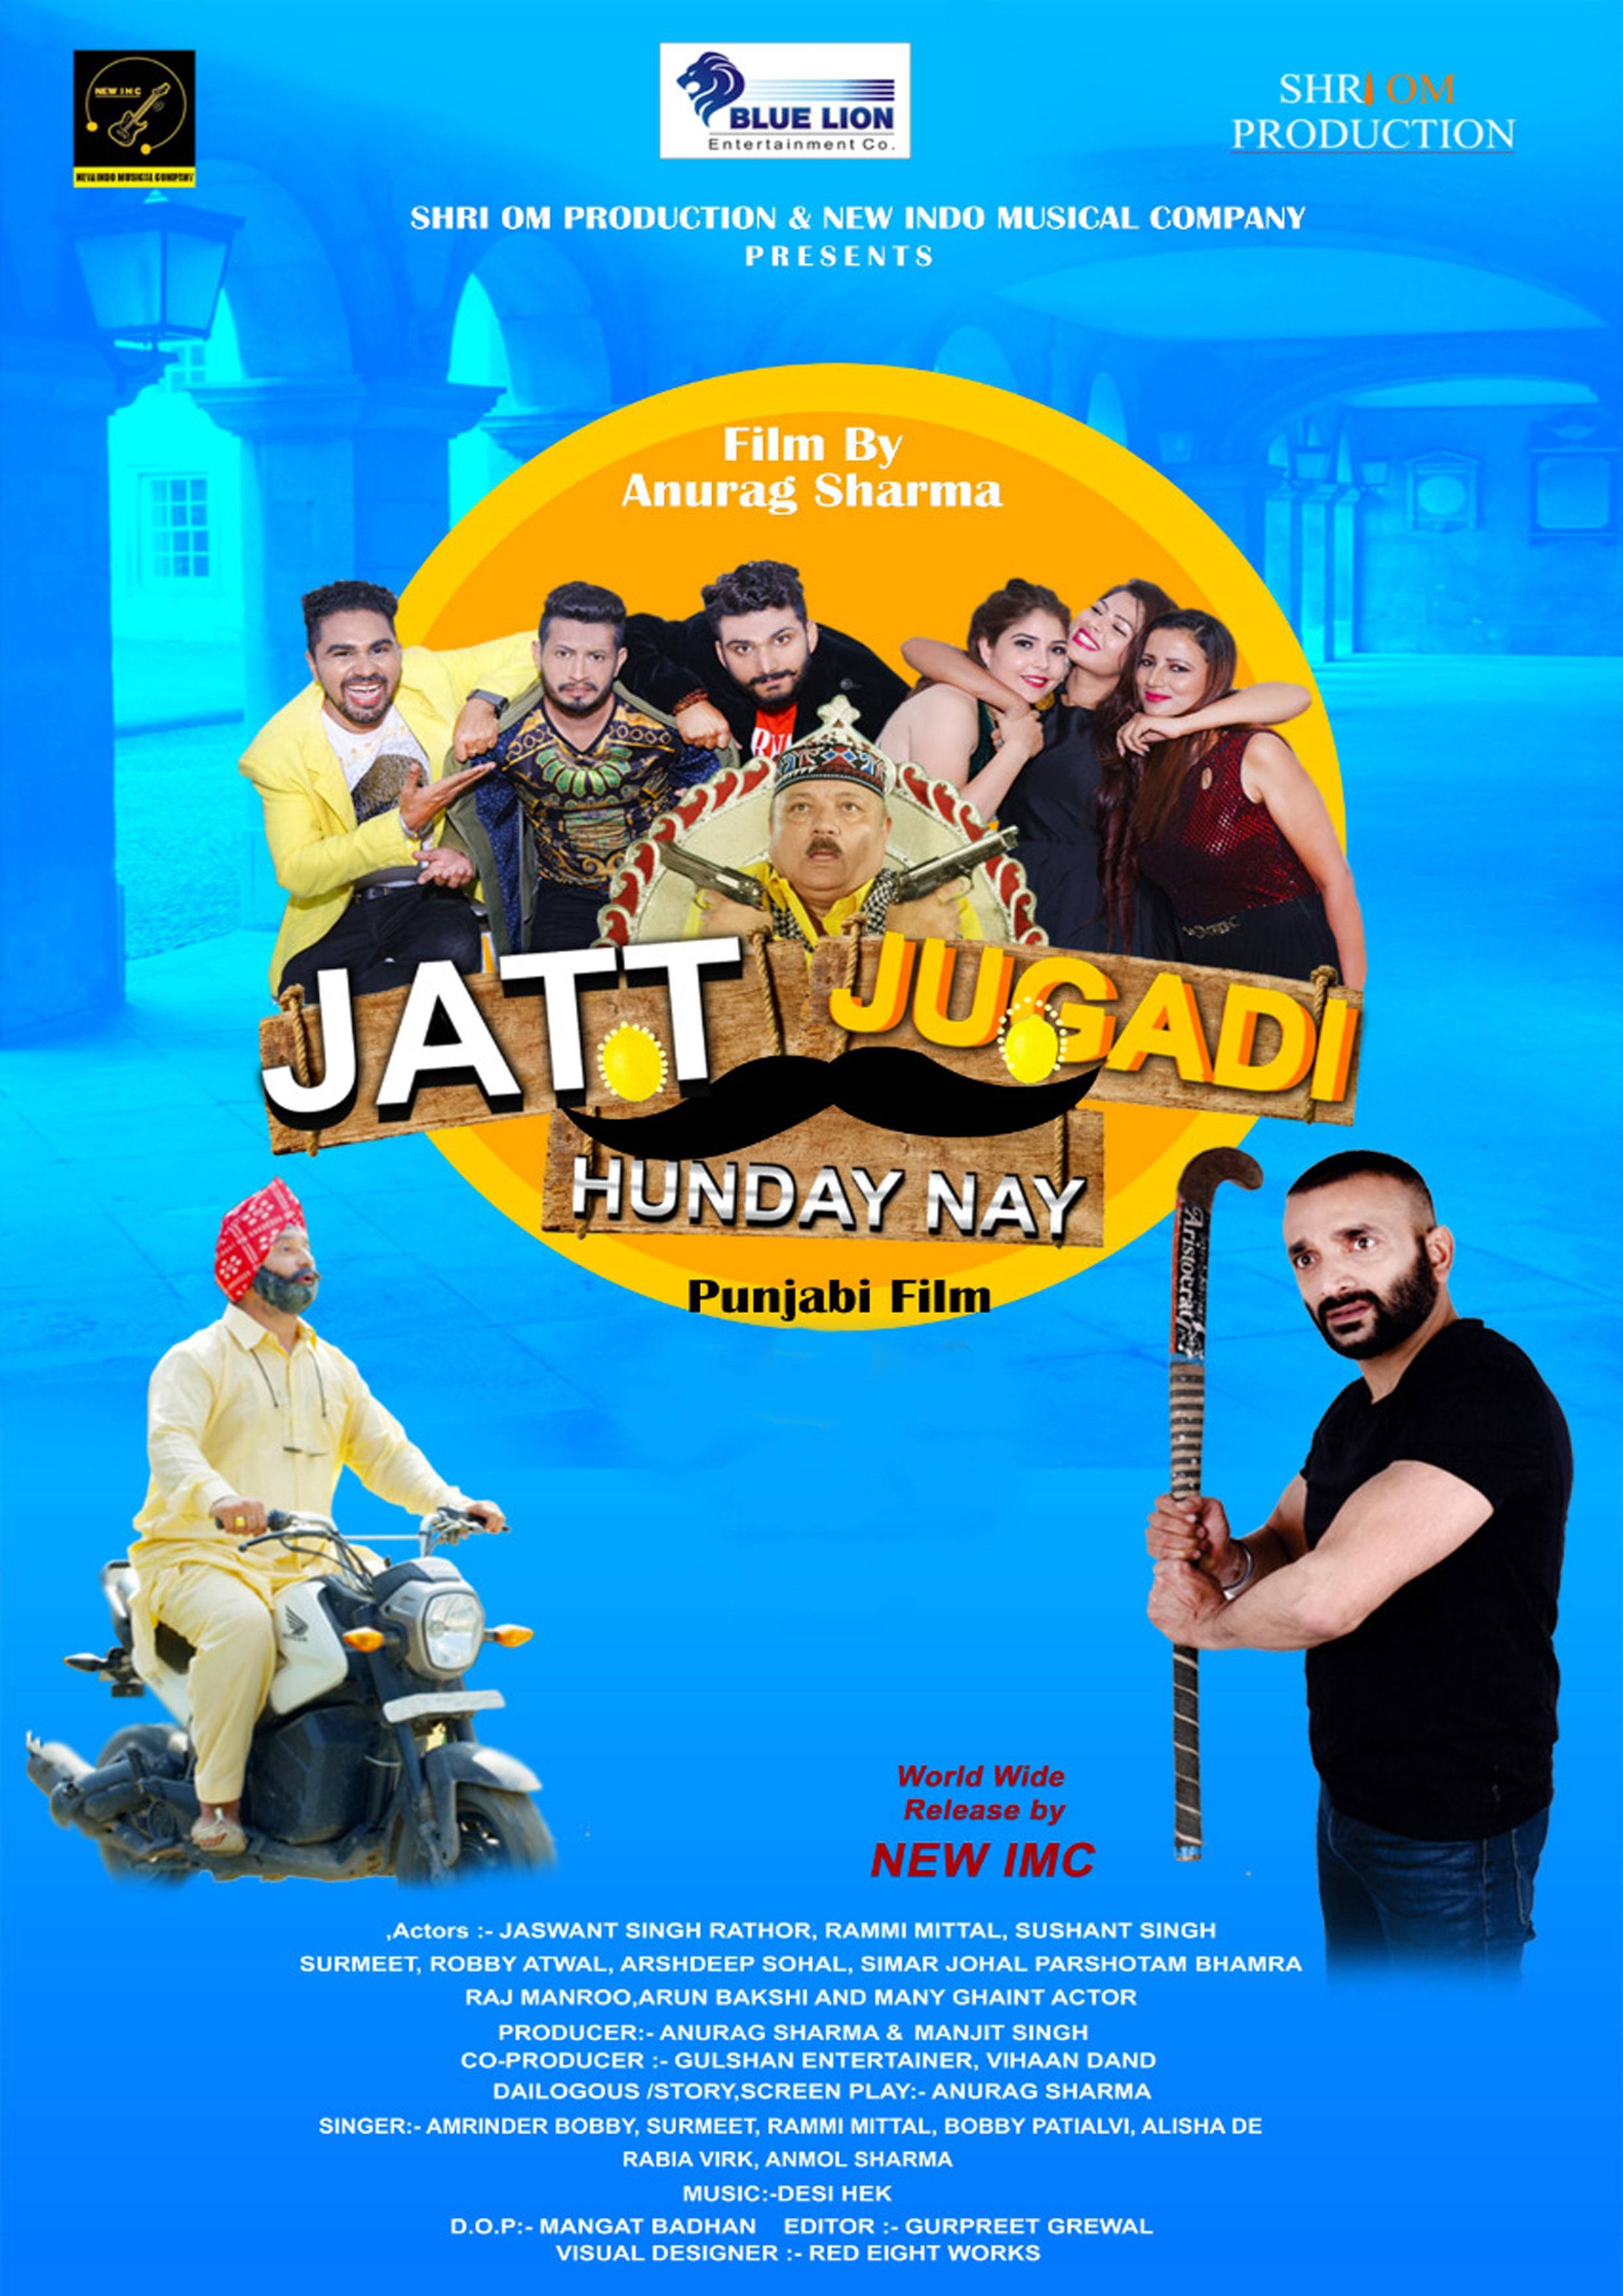 Jatt Jugadi Hunday Nay (2019) Punjabi HDRip download full movie